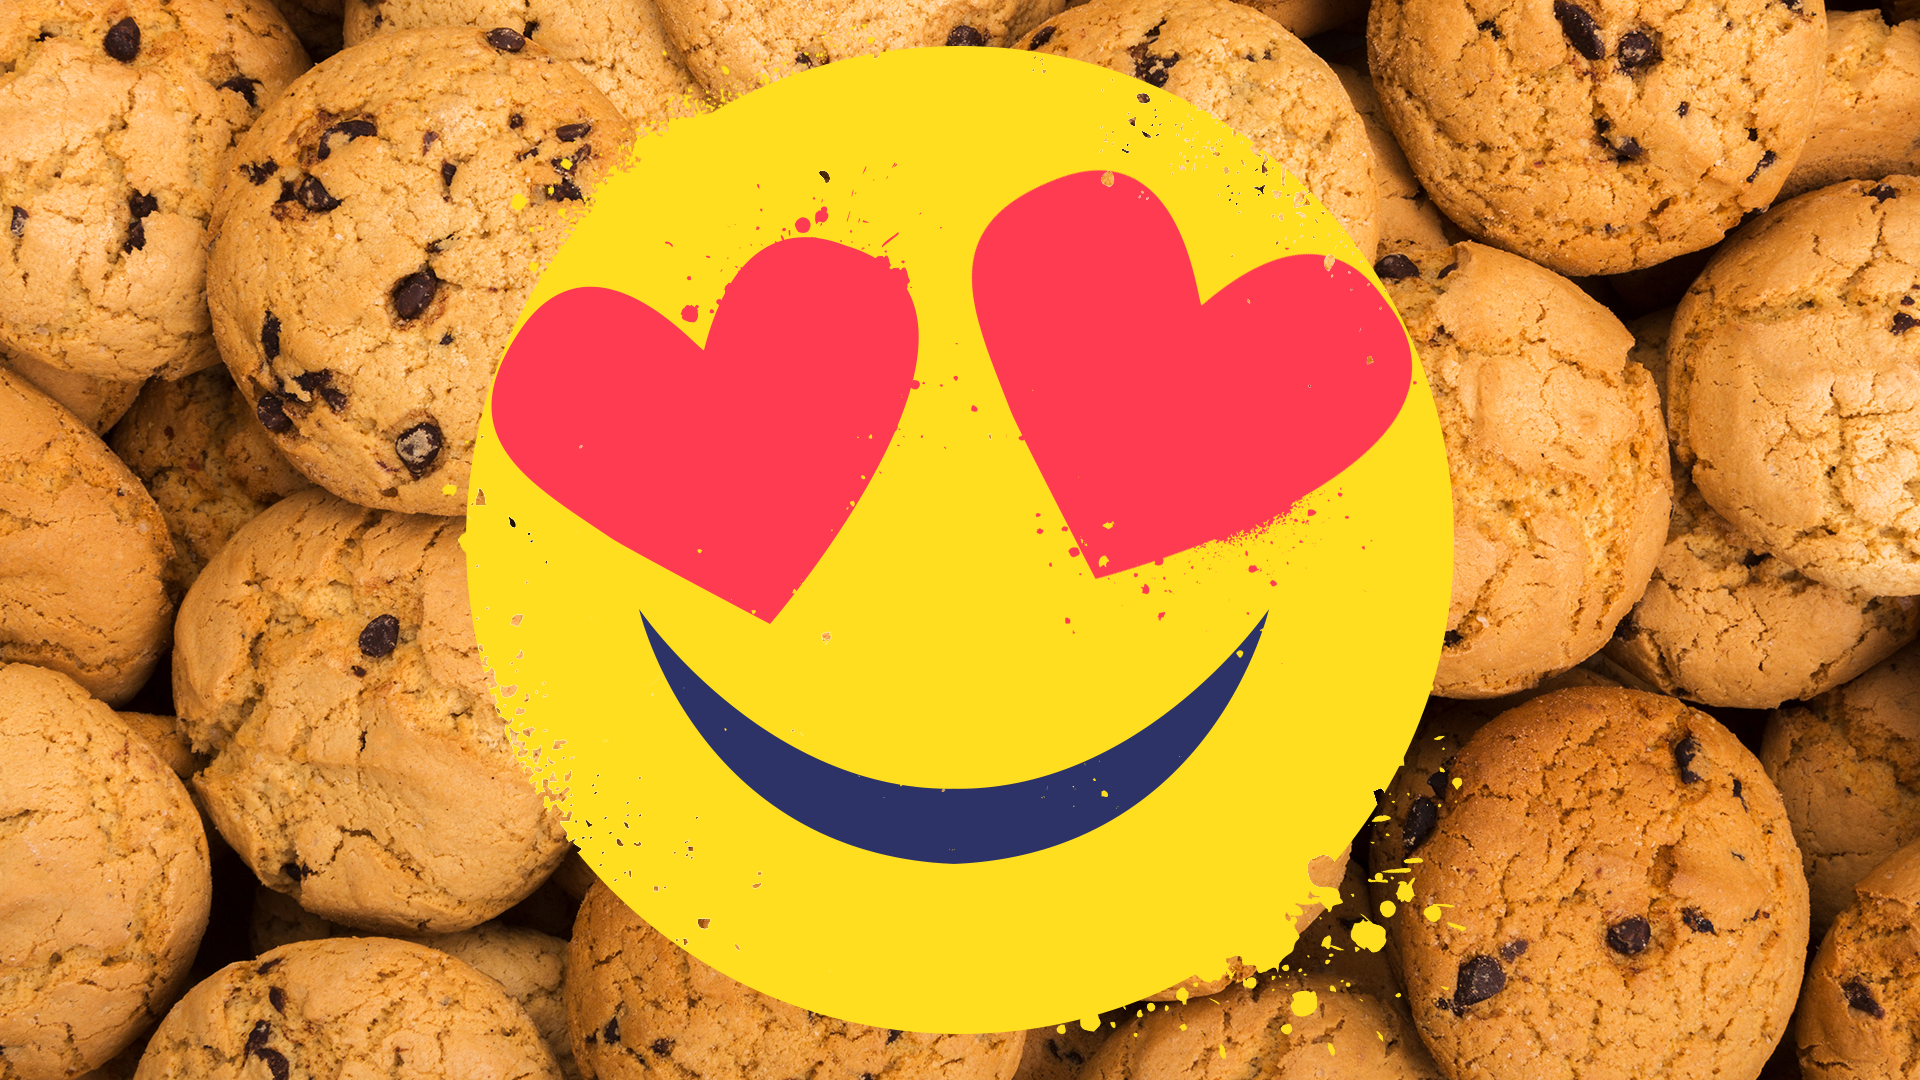 Heart eyes emoji on cookie background